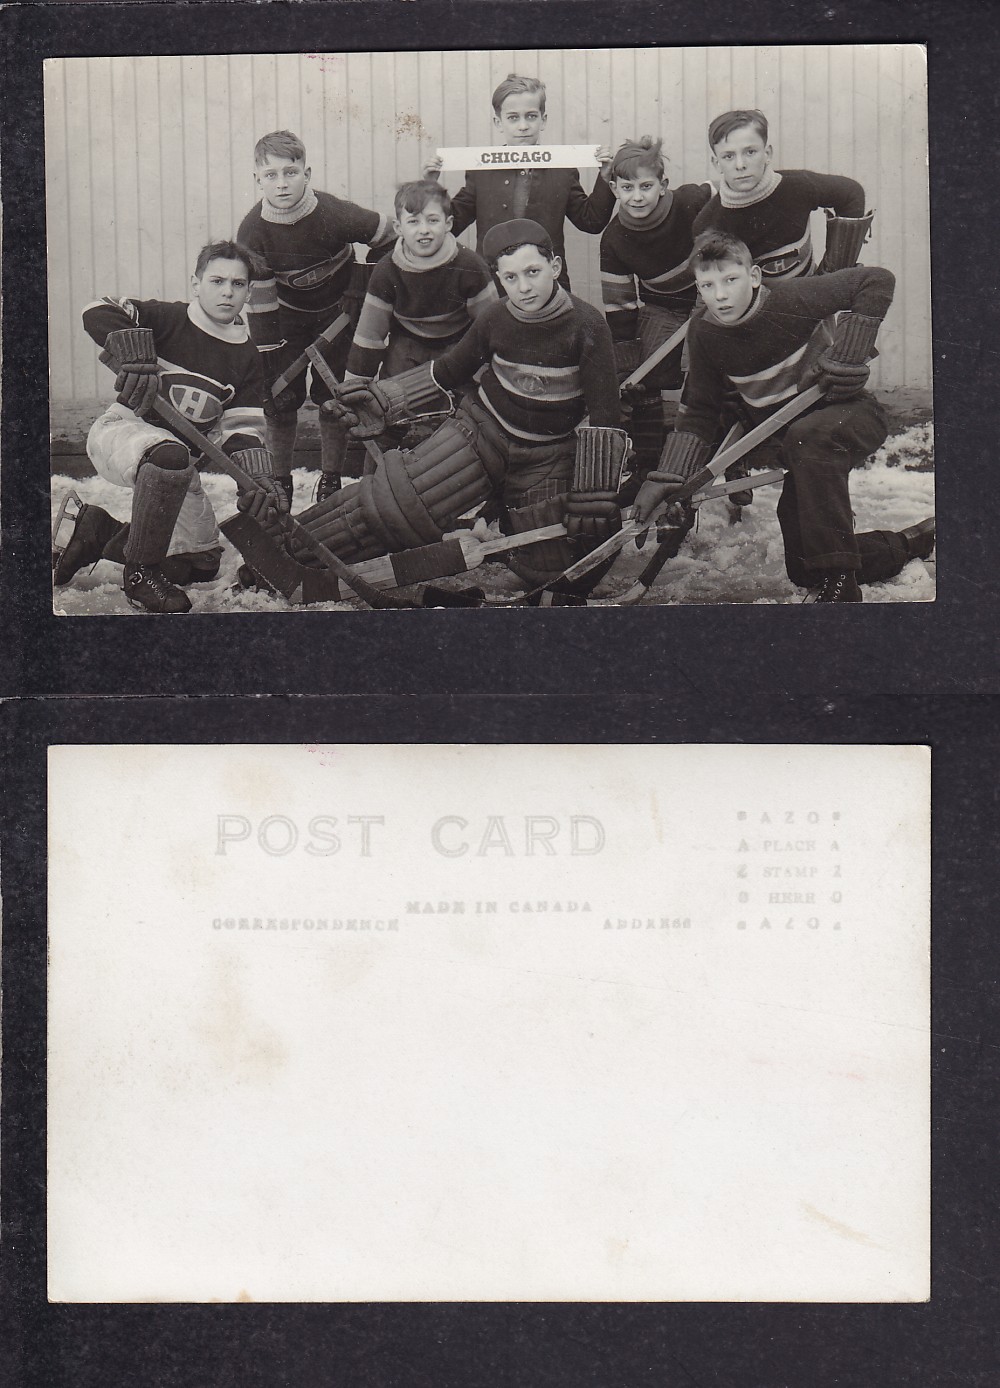 1920'S LEVIS HOCKEY TEAM POST CARD photo